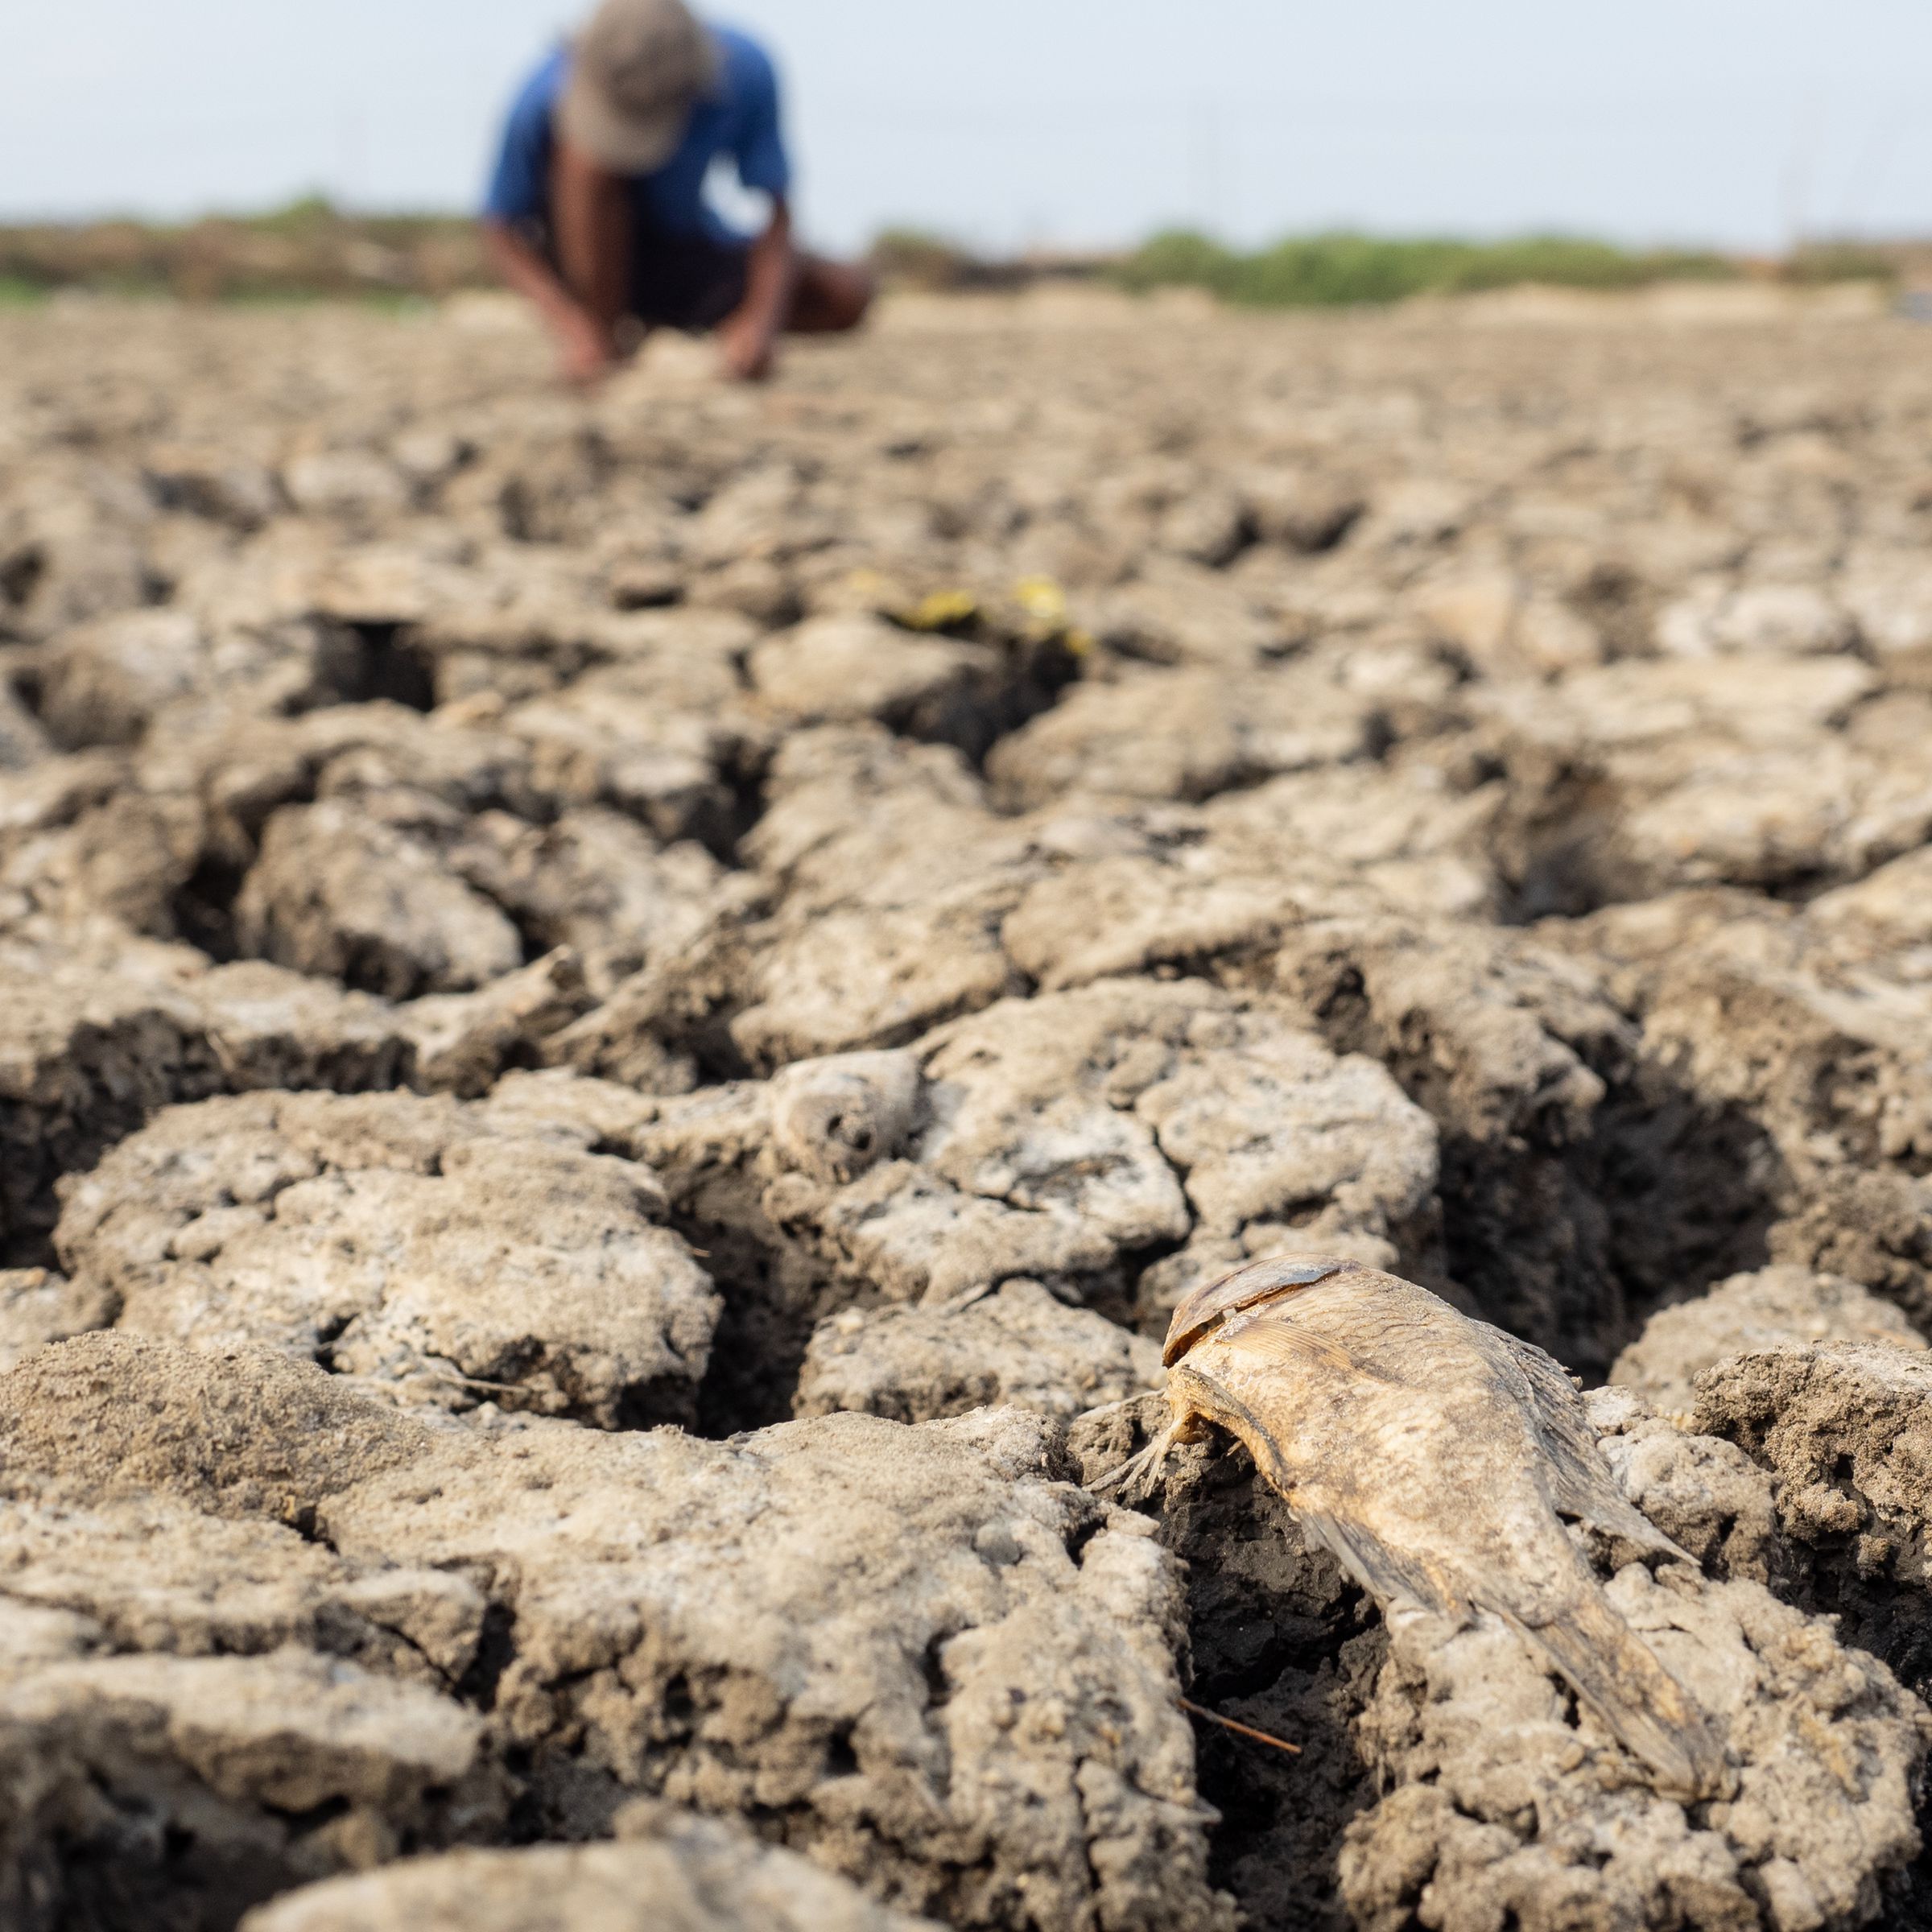 El Nino Phenomenon Causes Drought In Tangerang